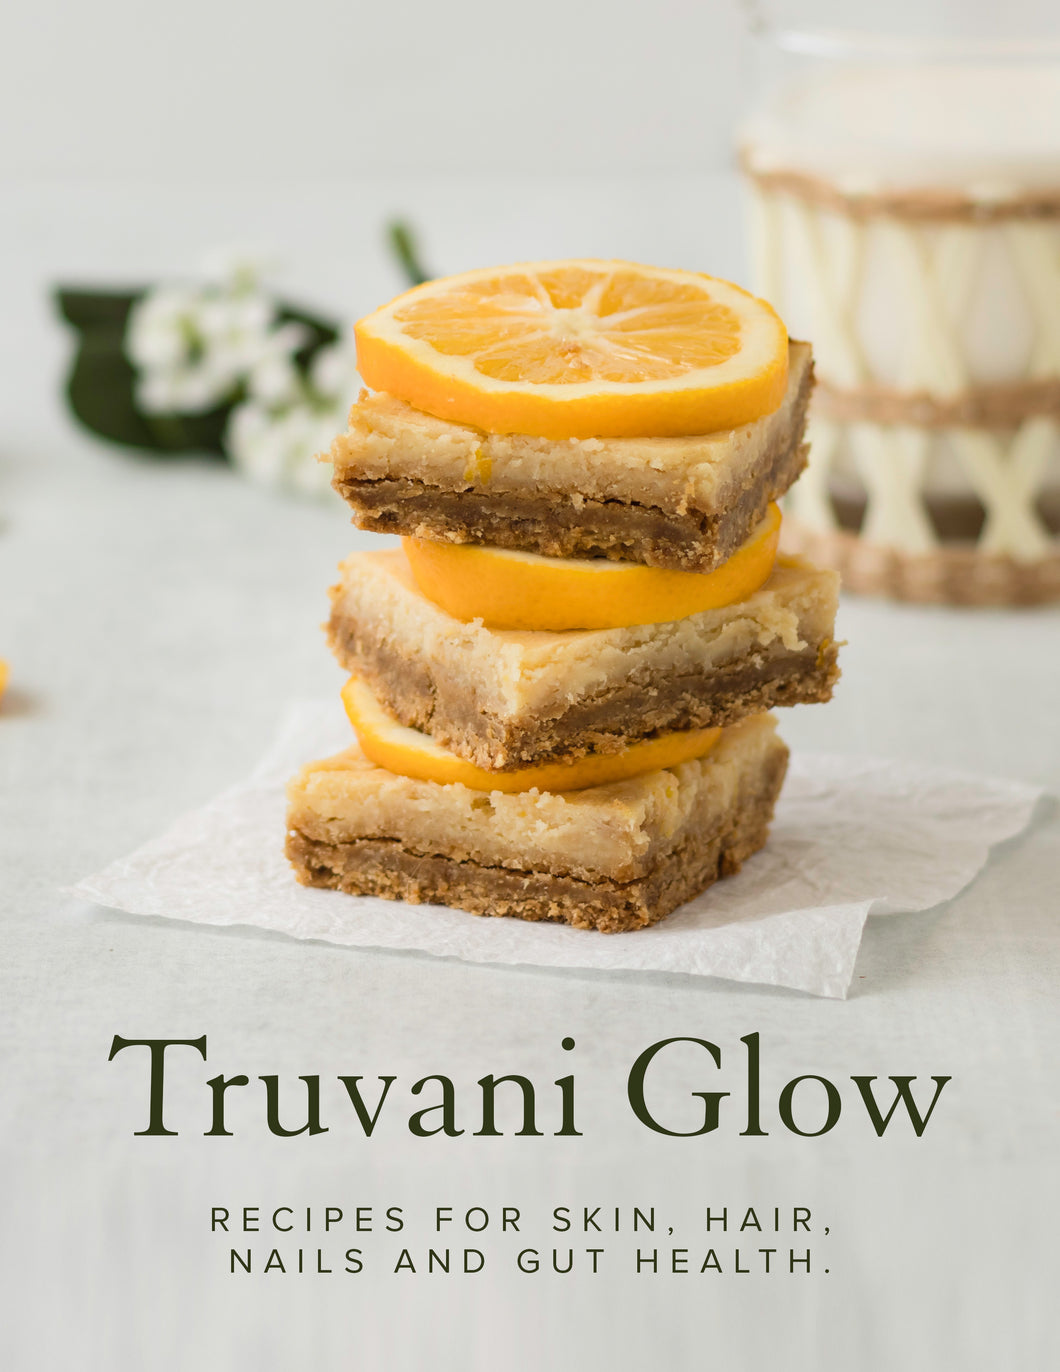 Truvani Morning Glow Recipe Guide